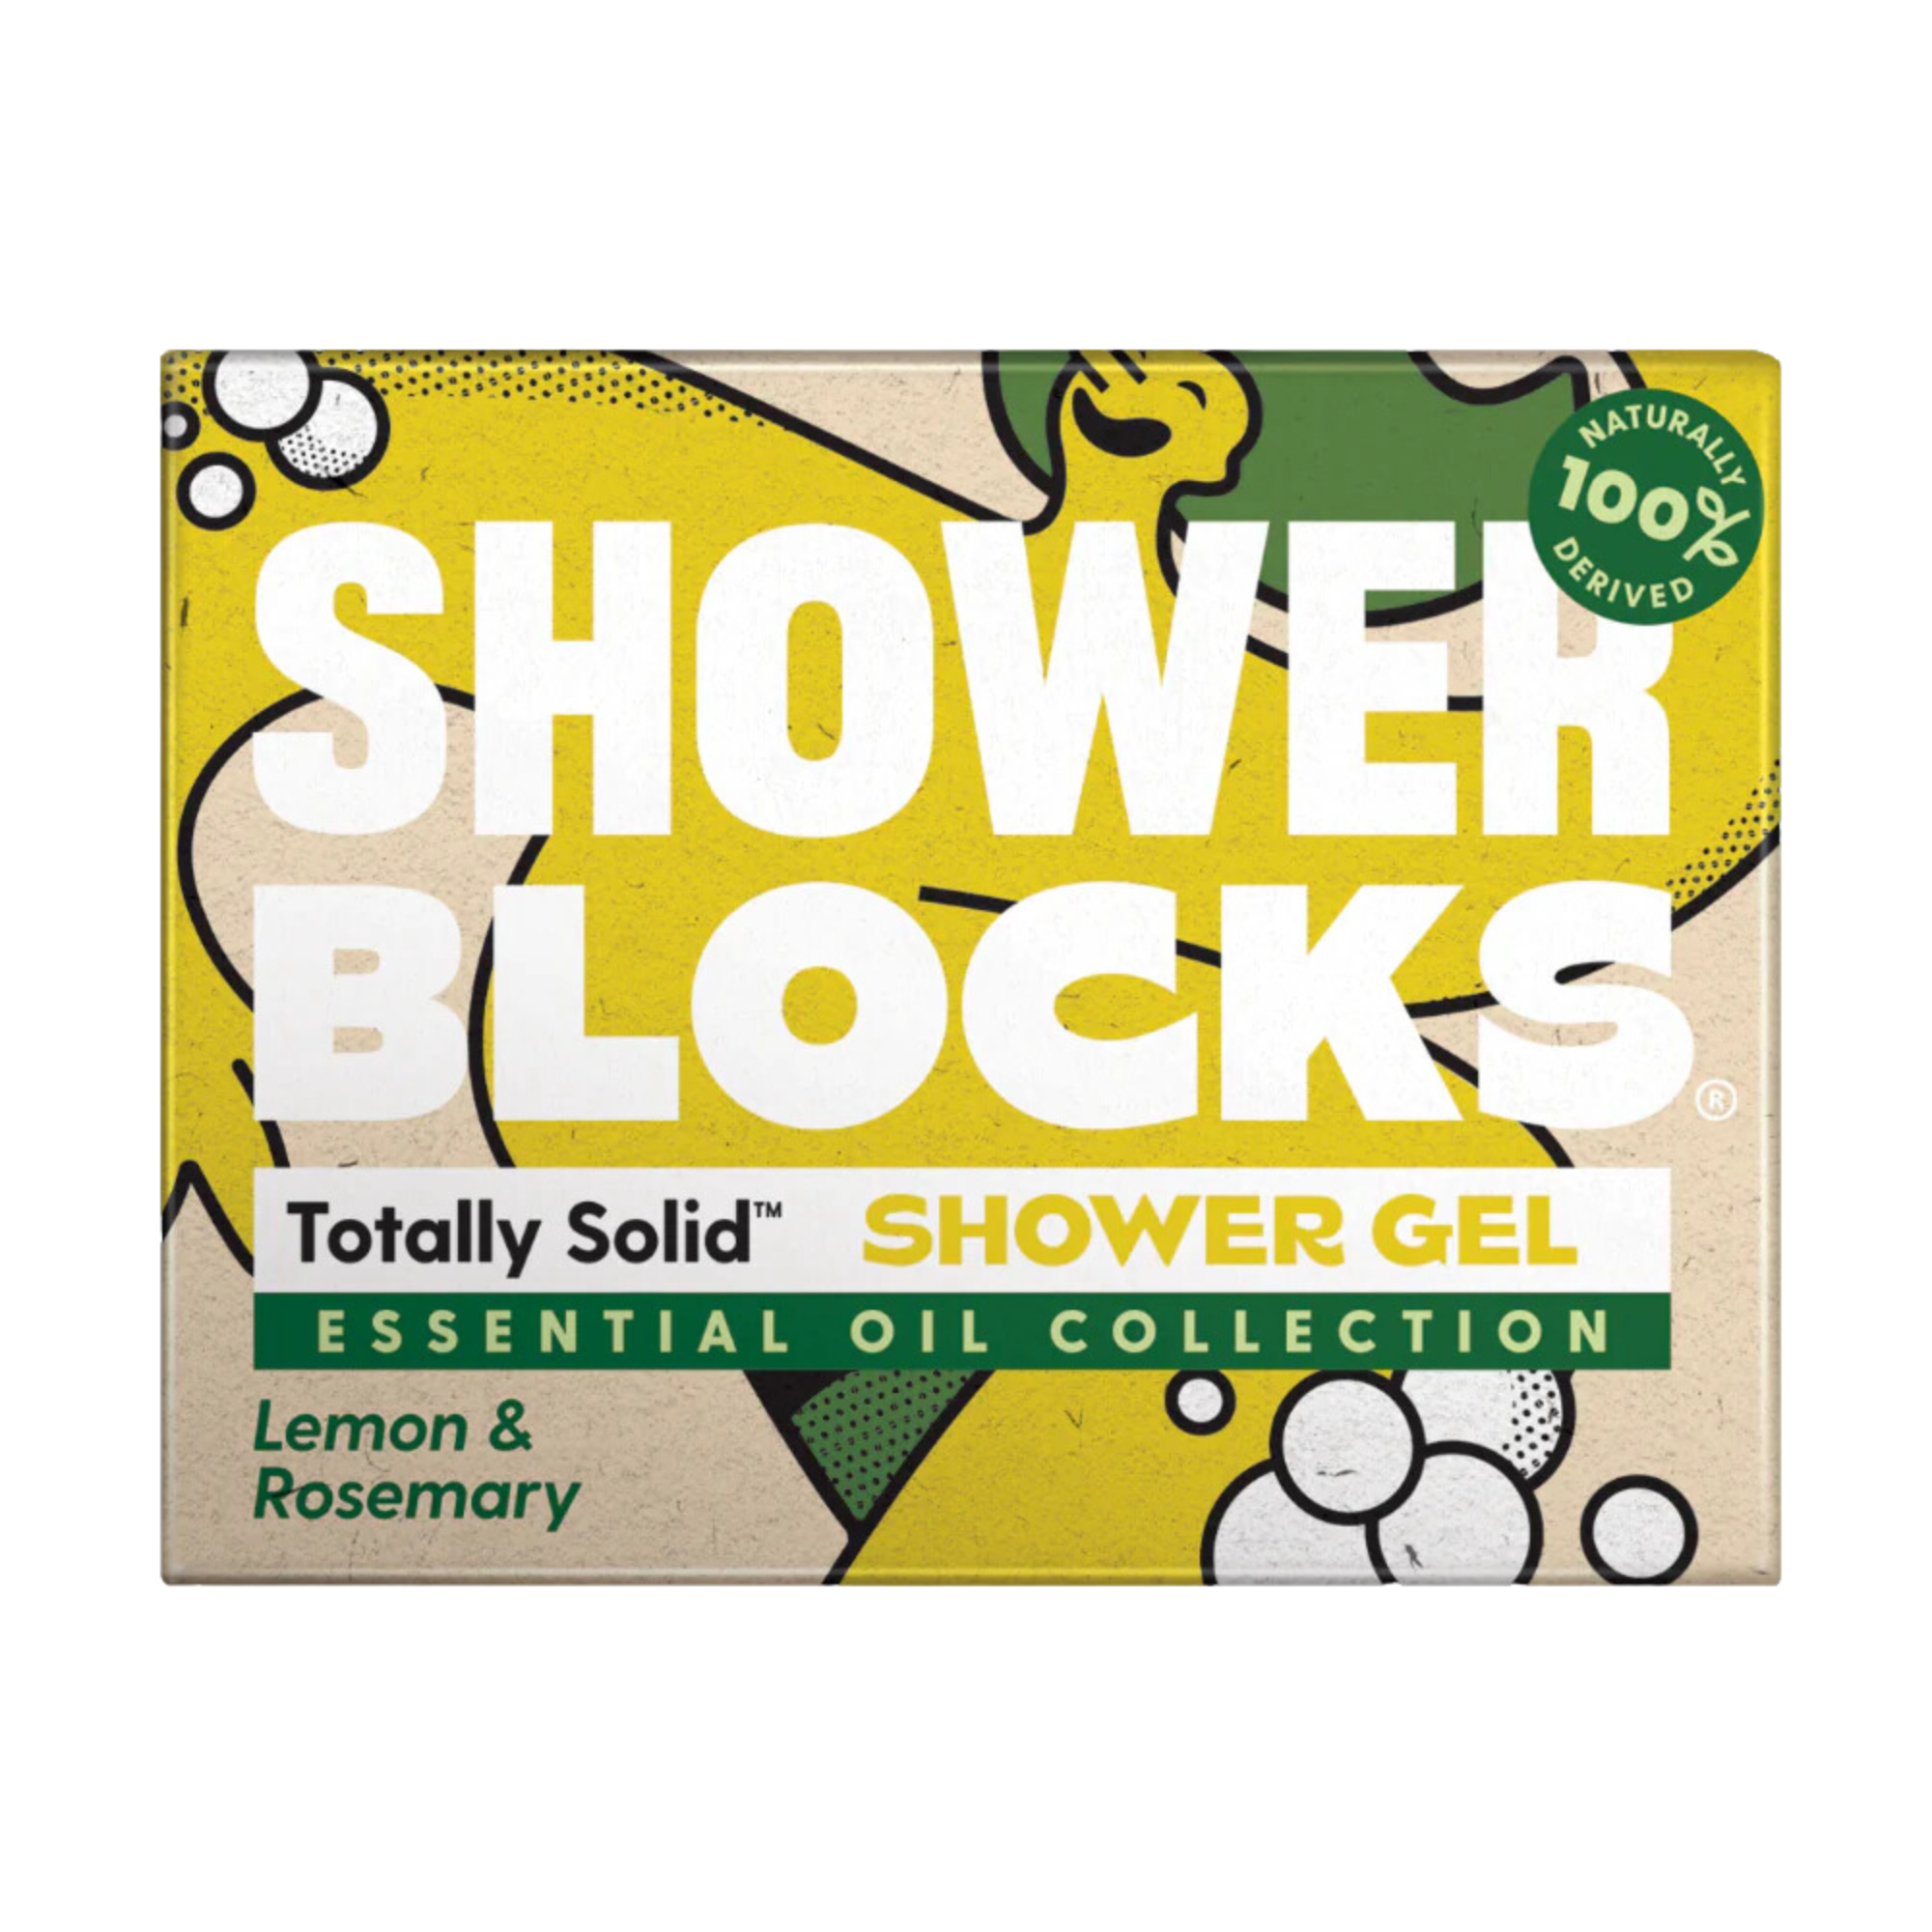 Showerblock Lemon & Rosemary